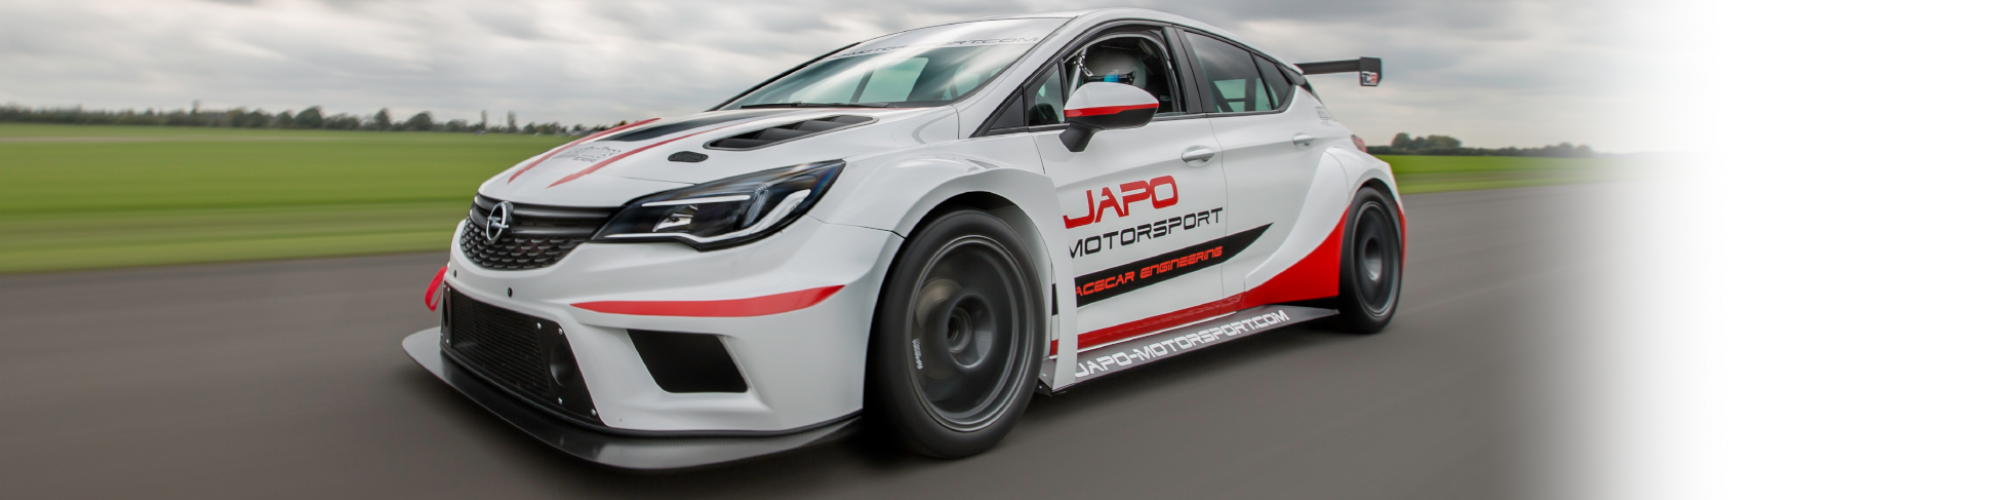 Japo Motorsport GmbH cover image